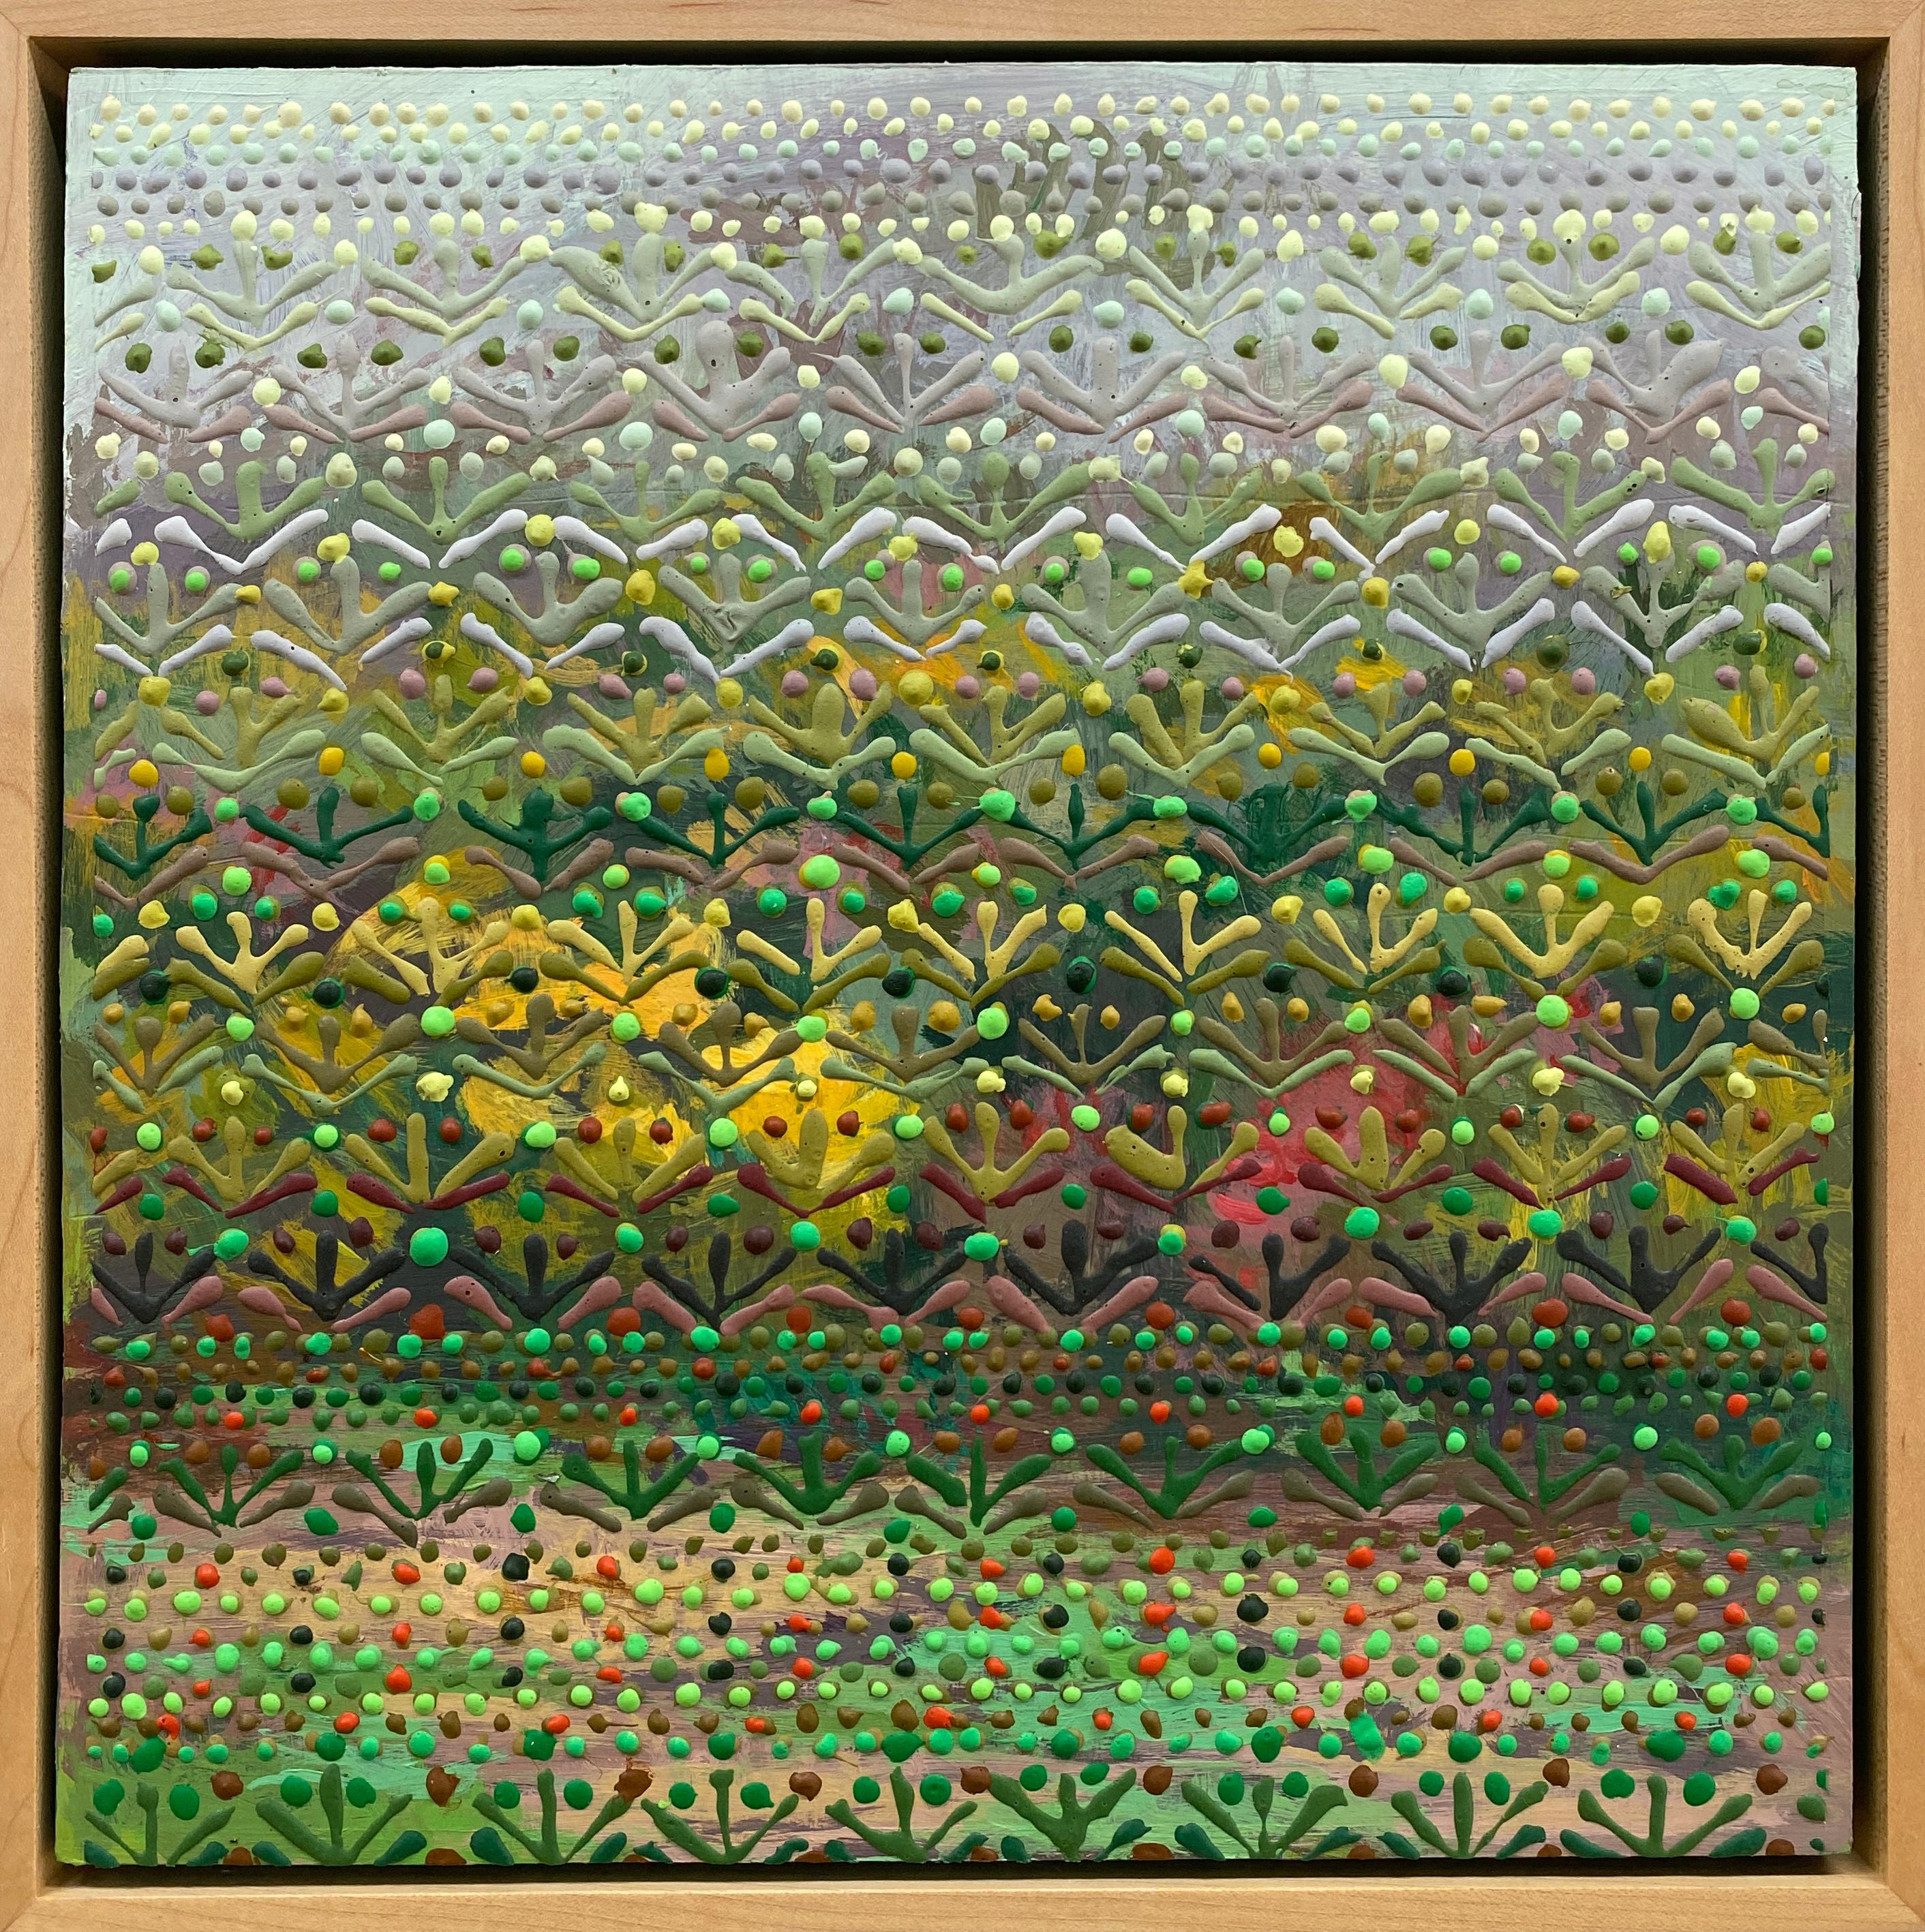 Amanda Joy Brown Abstract Painting - FRAGMENTED LANDSCAPE 4 - Framed Landscape Painting w/ Abstract, Textured Overlay